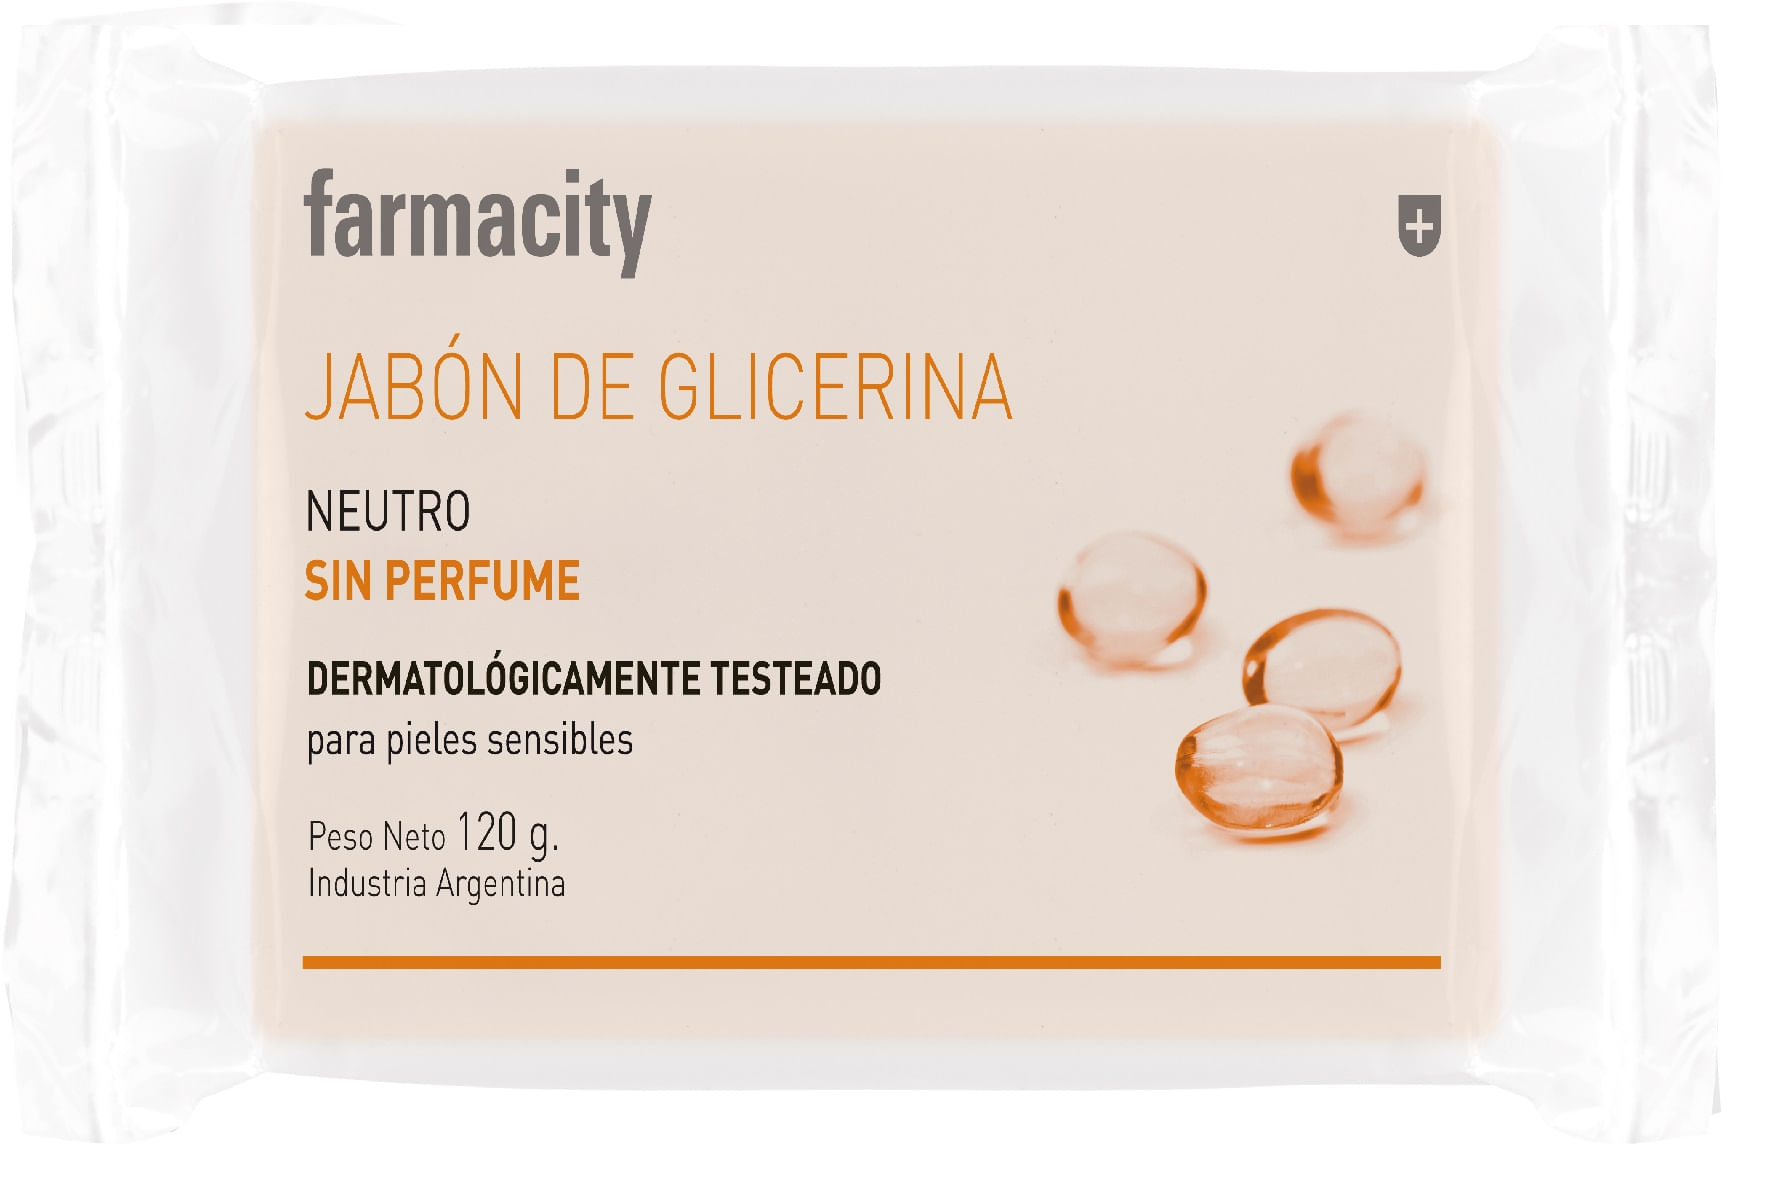 Jabón de Glicerina Farmacity en Barra x 120 g